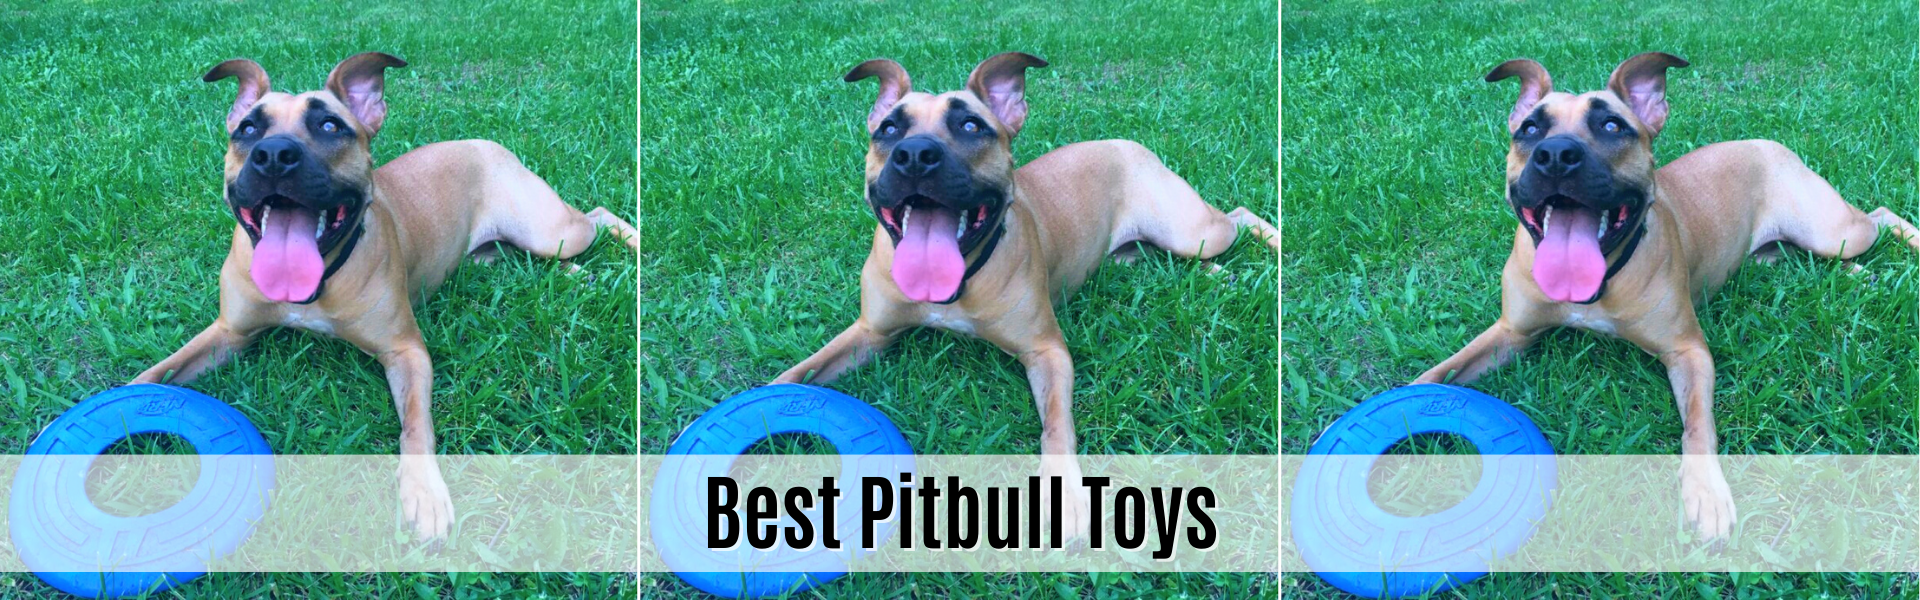 best pitbull toys